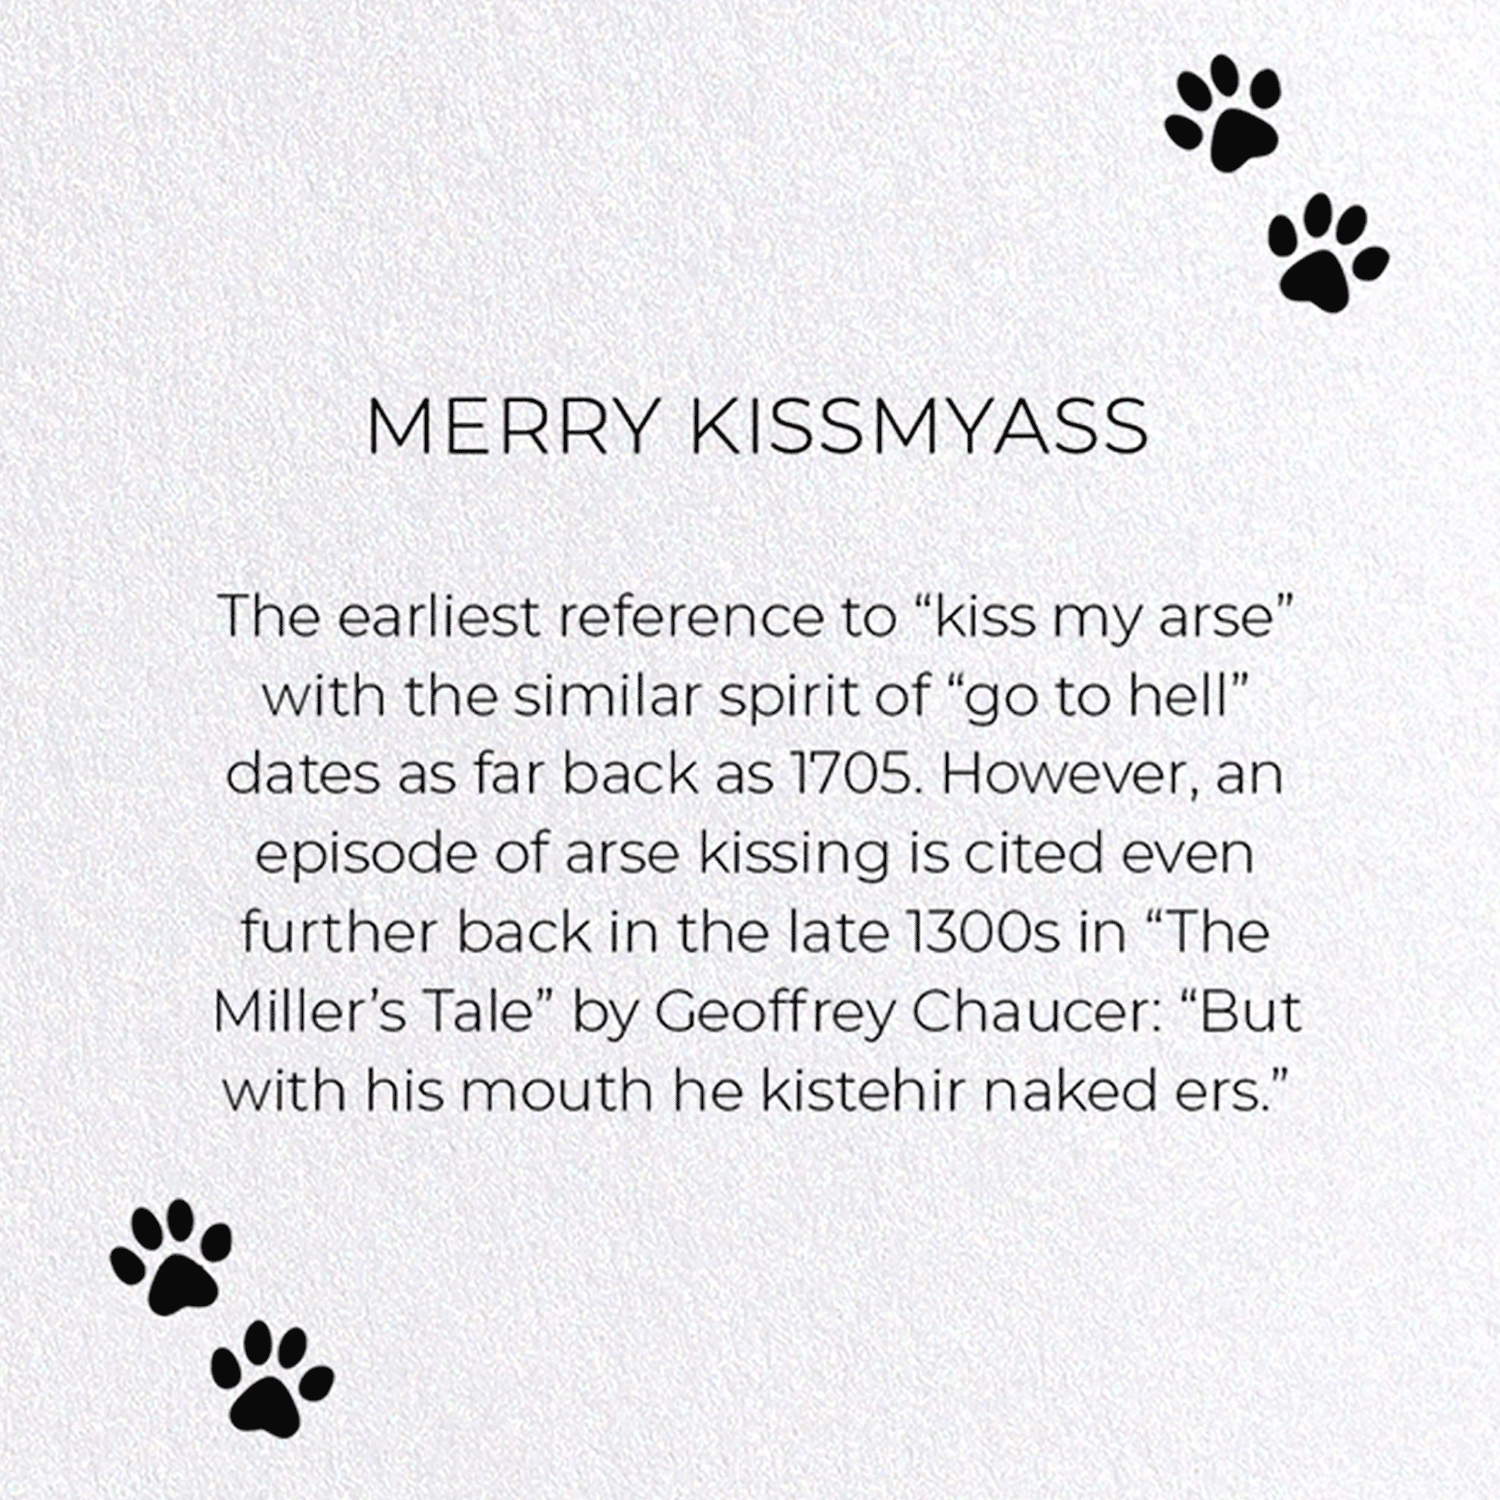 MERRY KISSMYASS